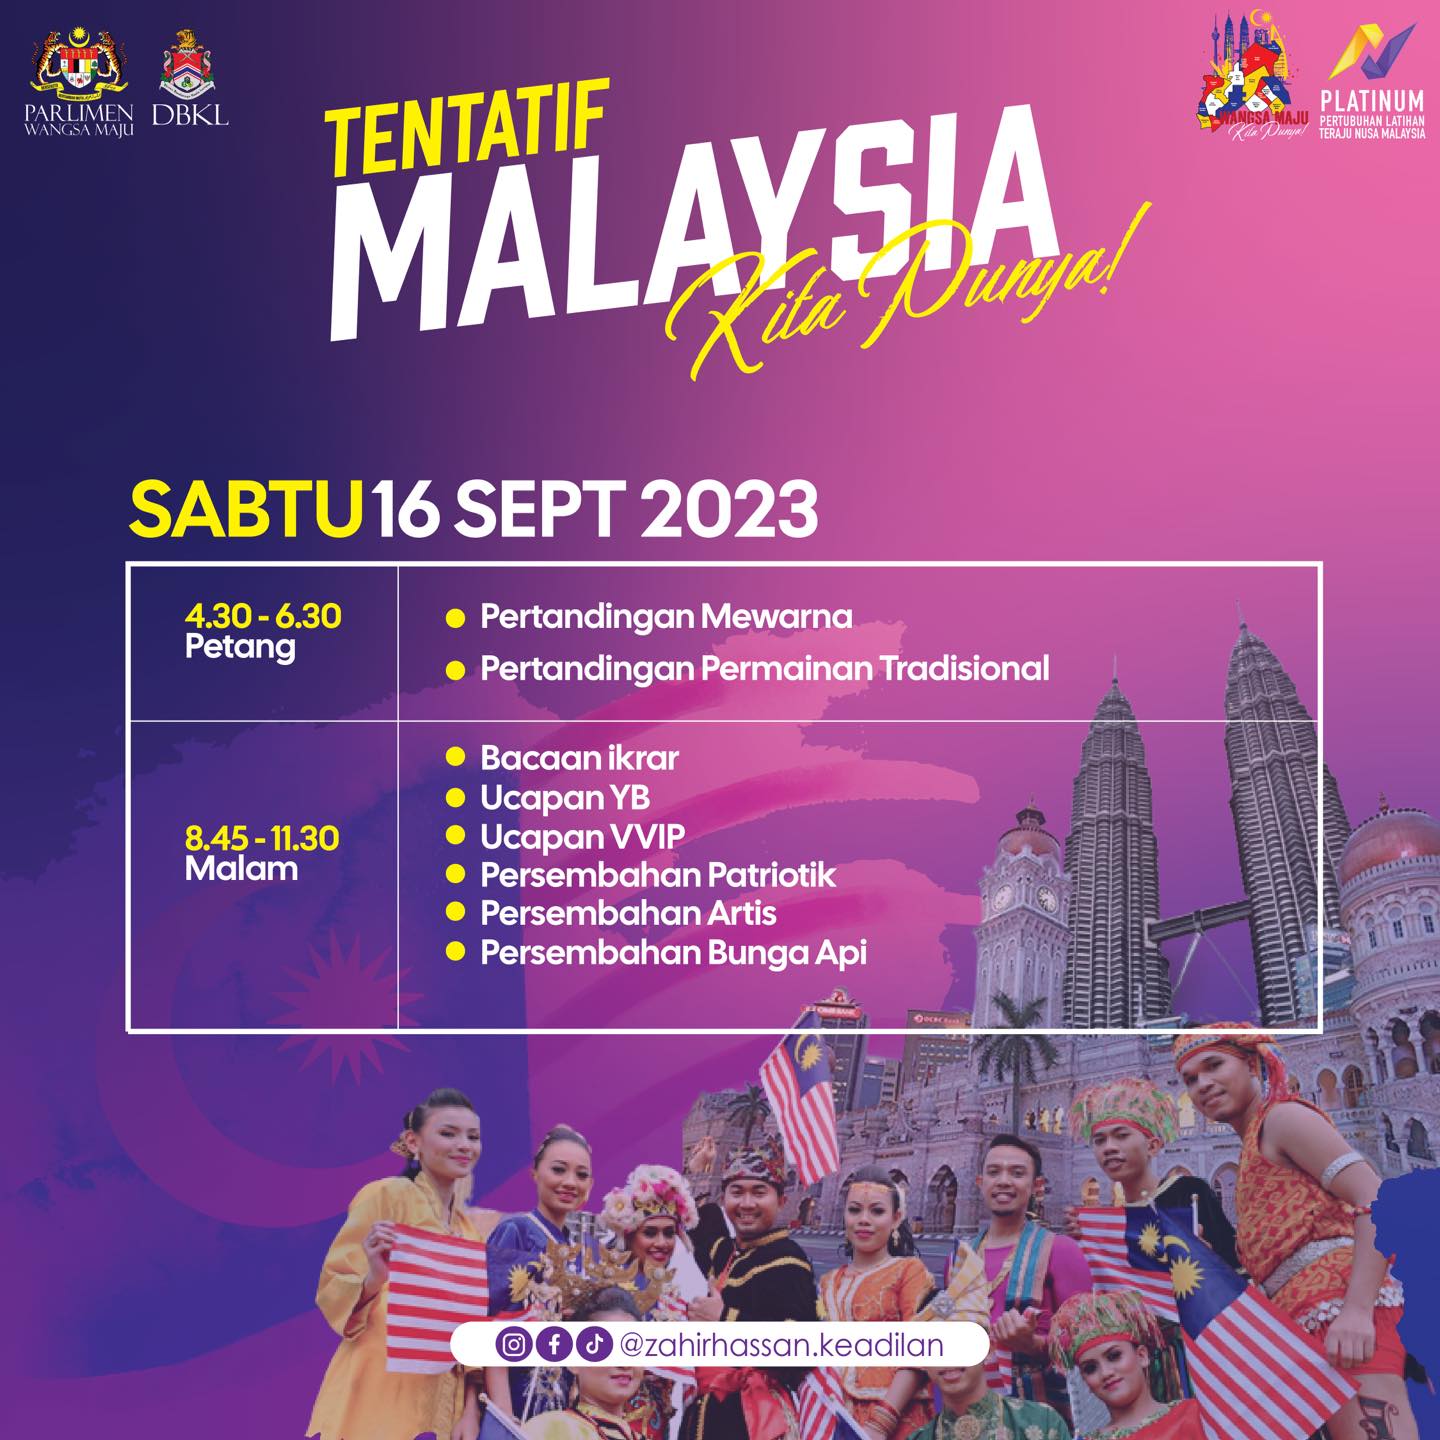 Tentatif Program Malaysia Kita Punya